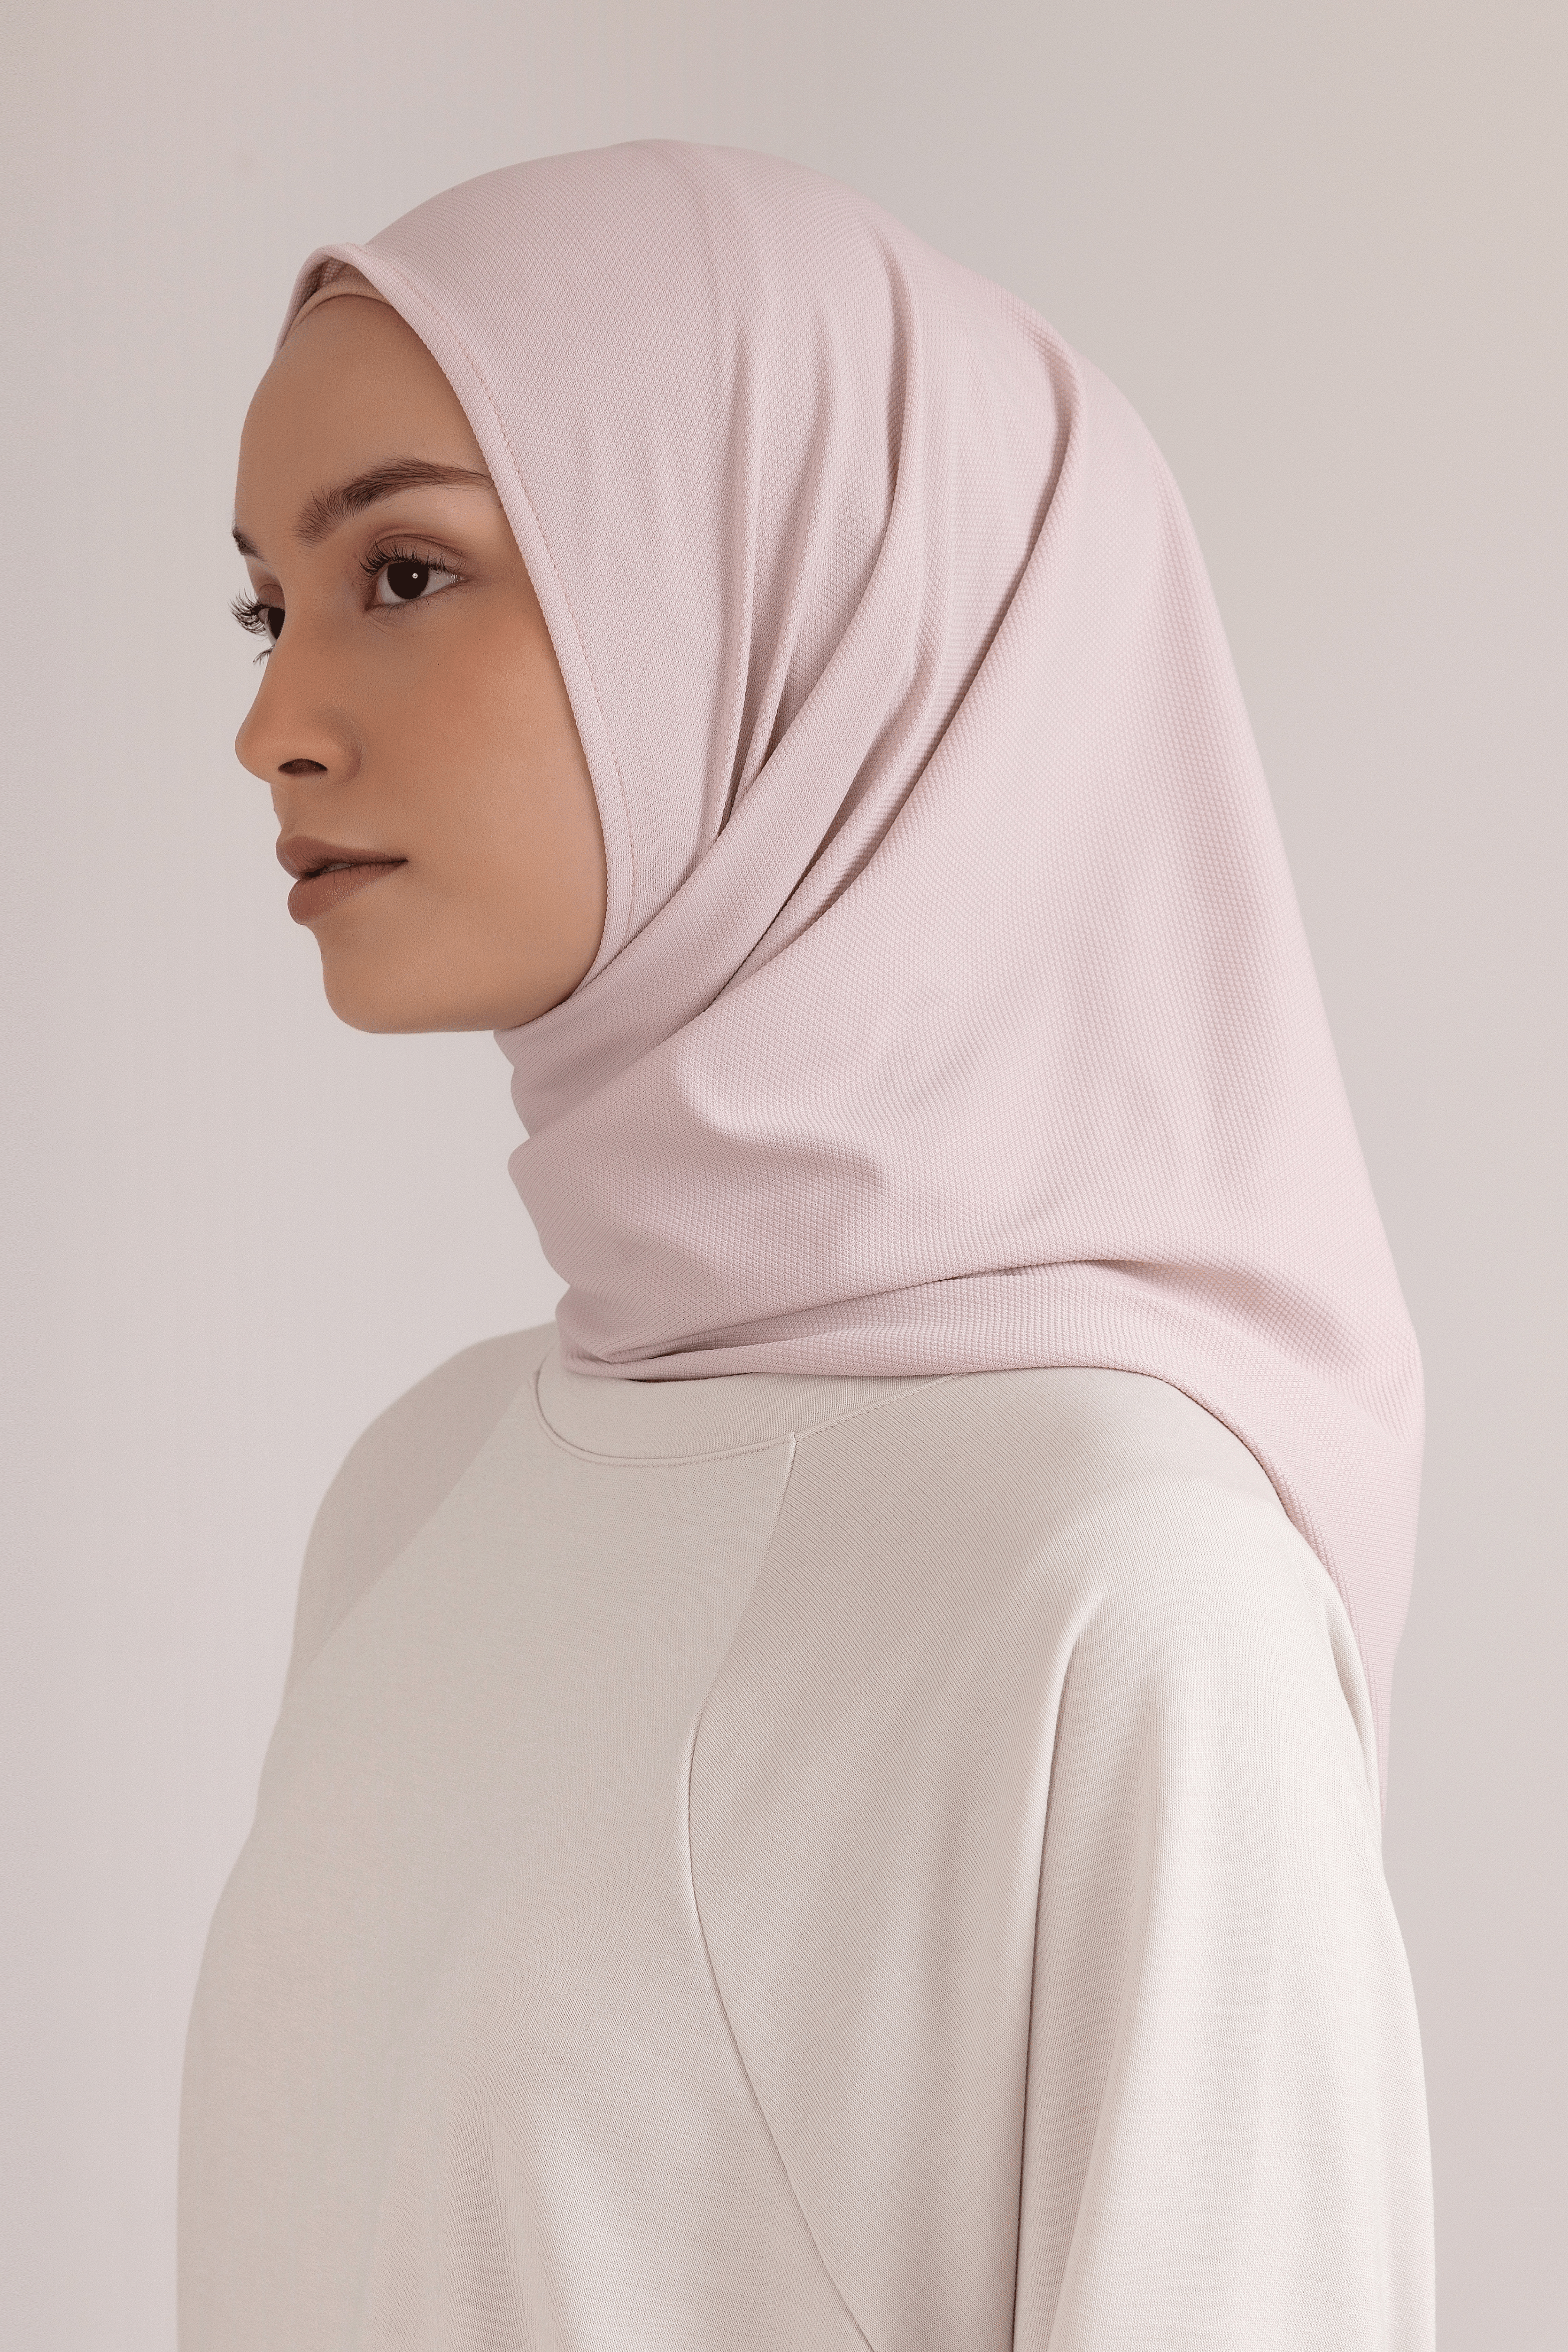 LAICA x RiaMiranda Instant Hijab - Nude Pink